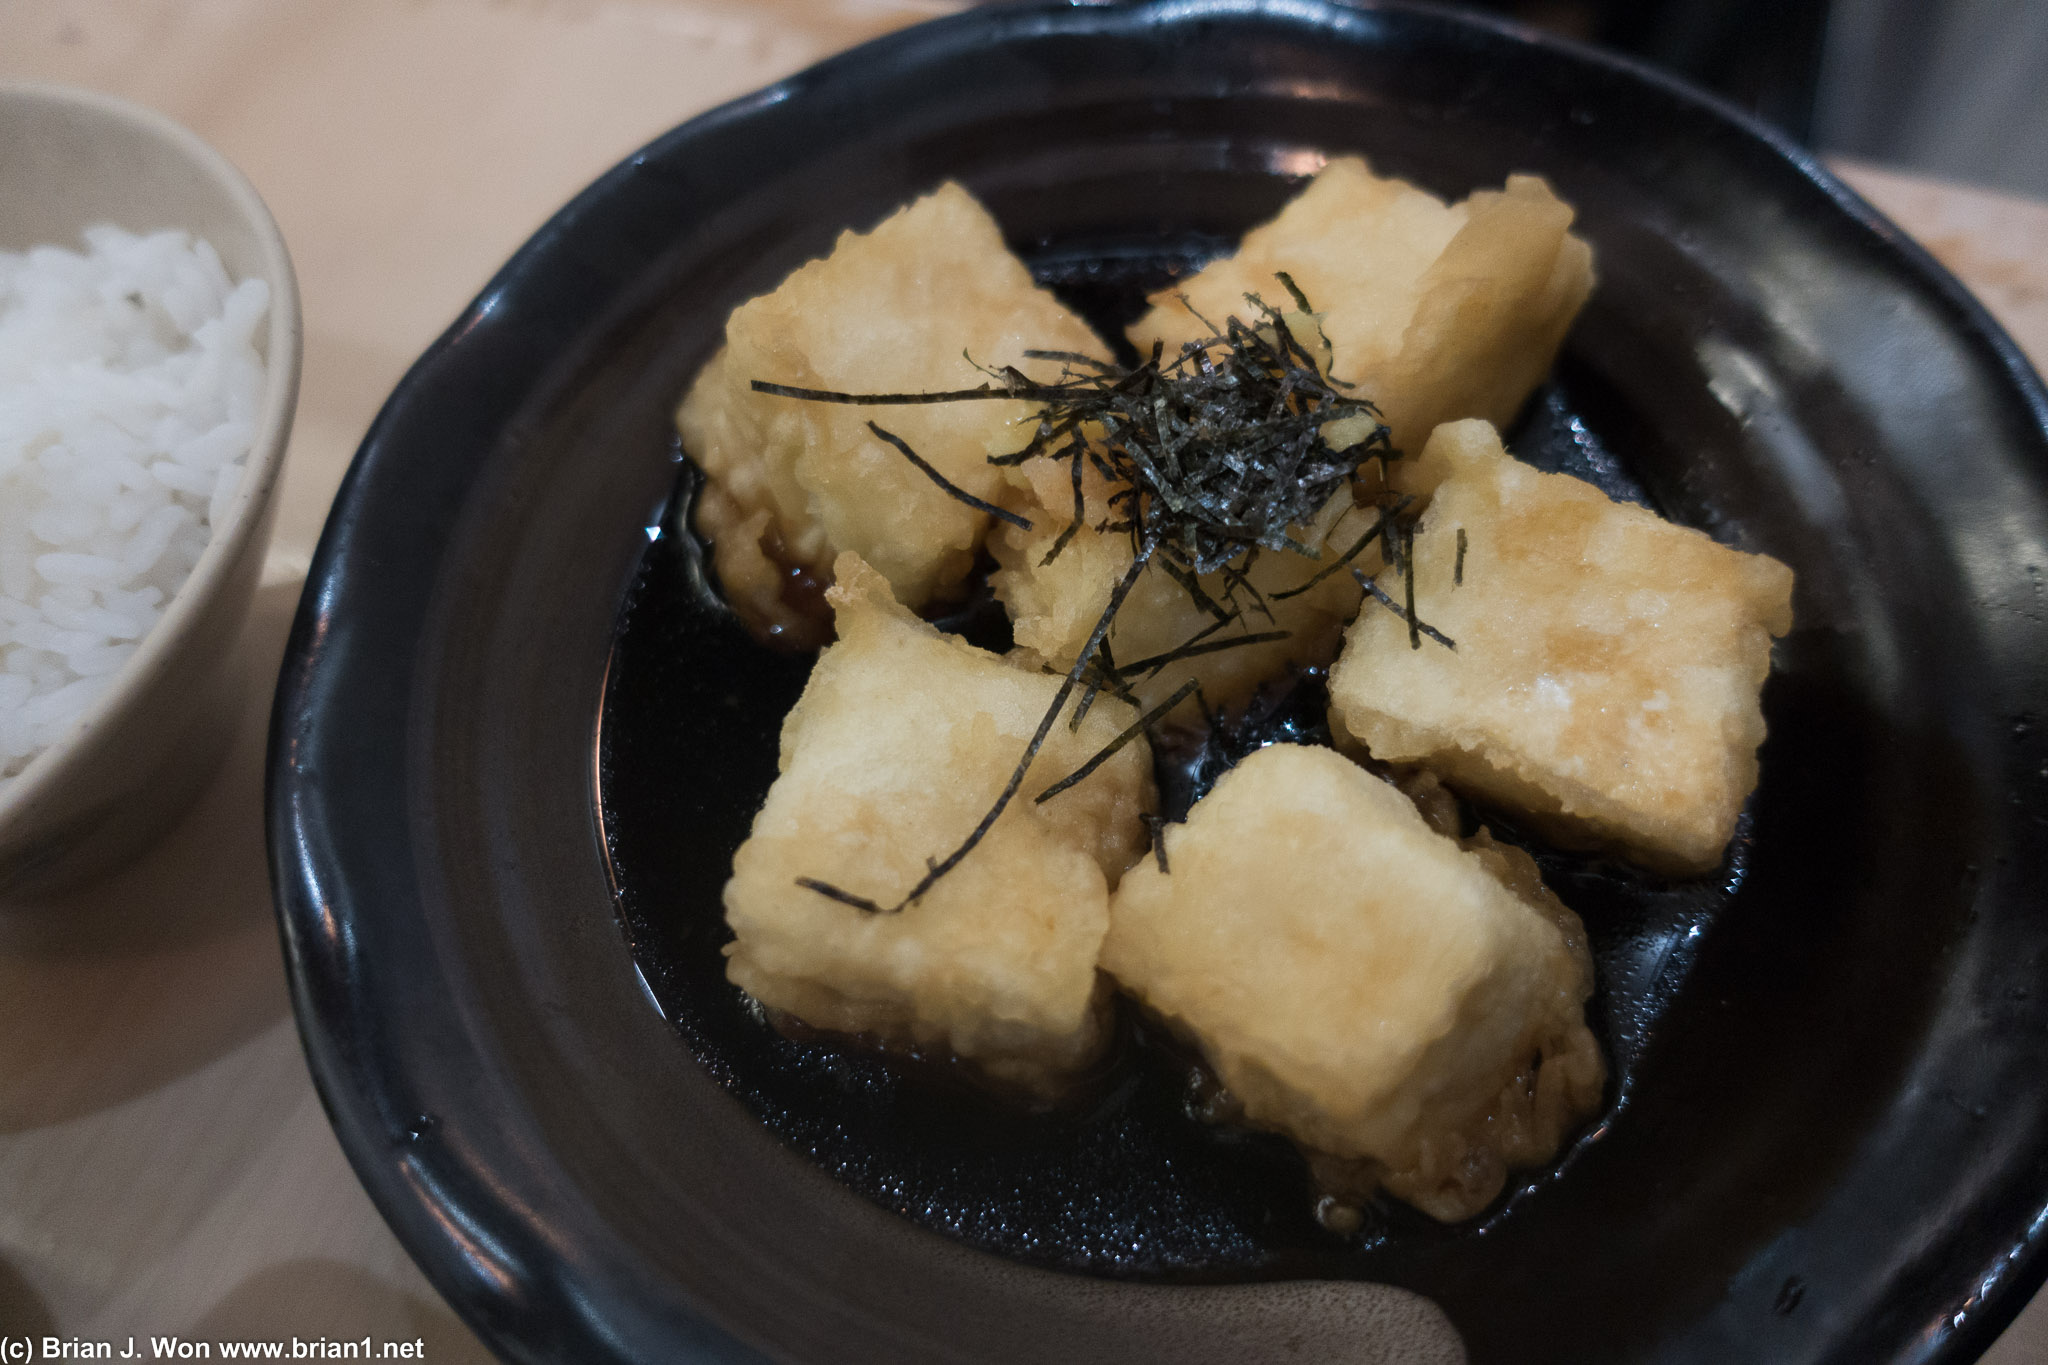 Agedashi tofu... a bit too much breading?